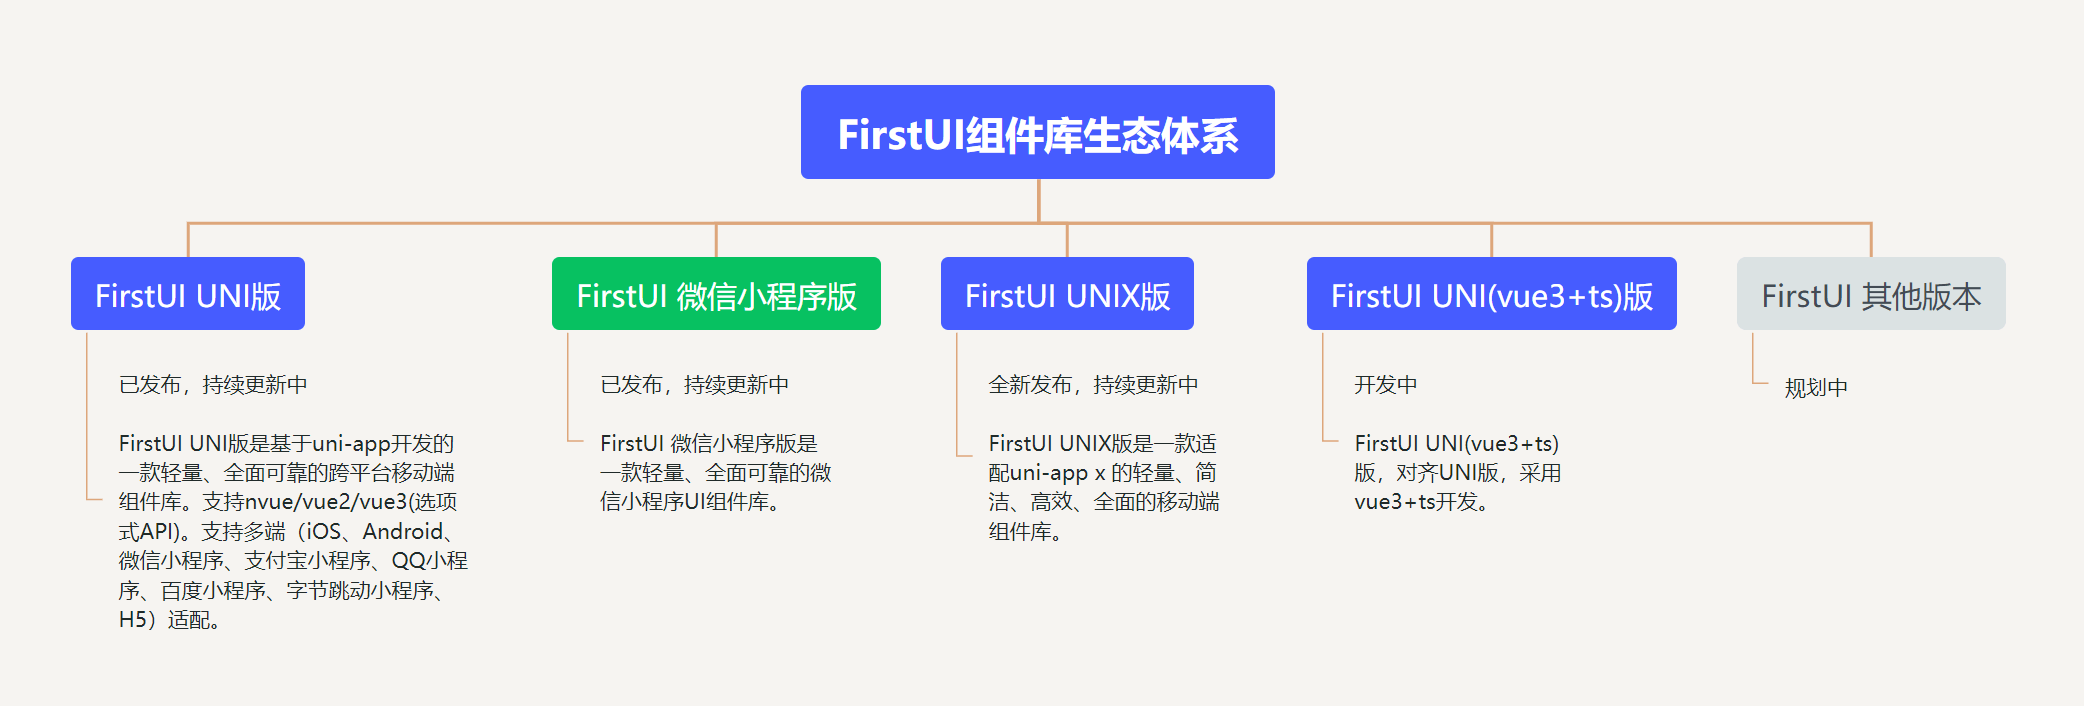 First UI 组件库生态